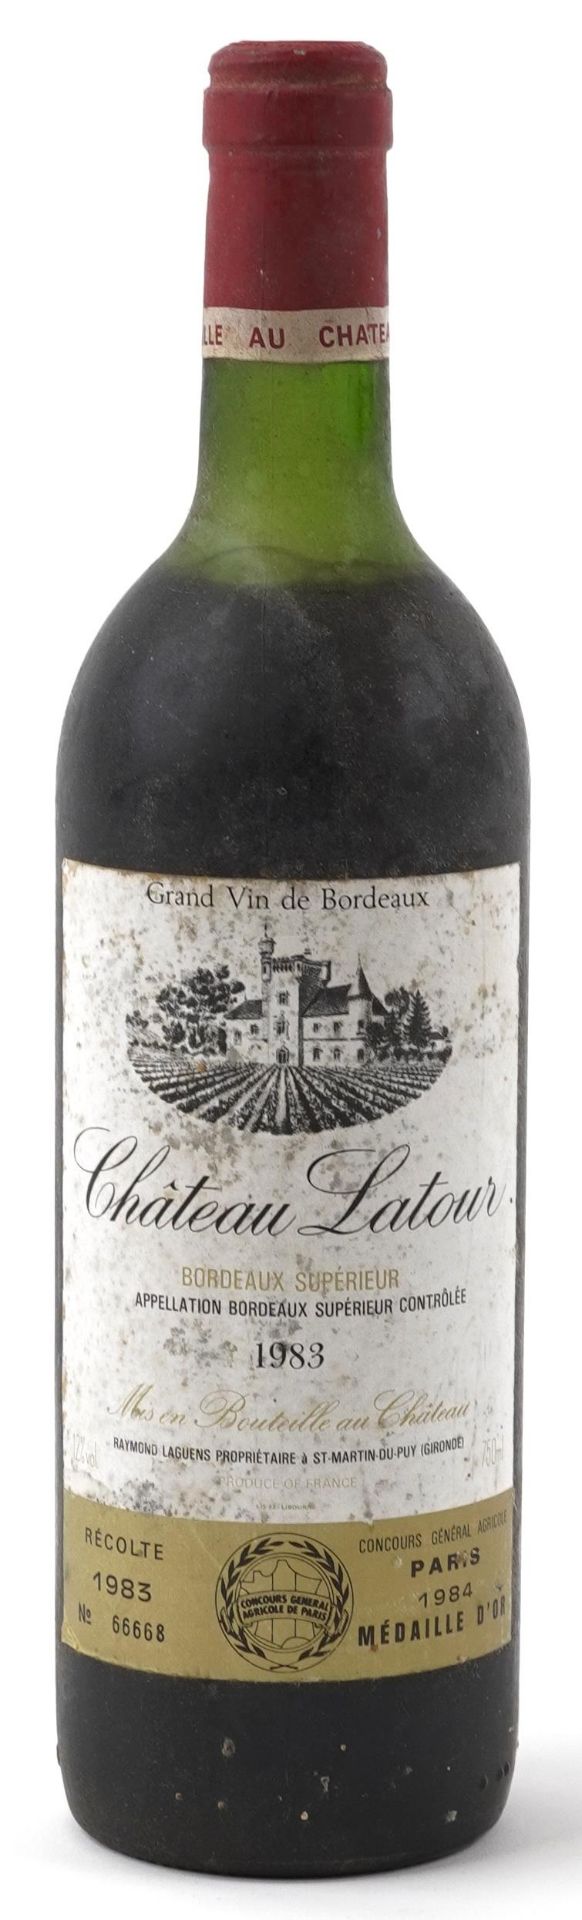 Bottle of 1983 Chateau la Tour red wine